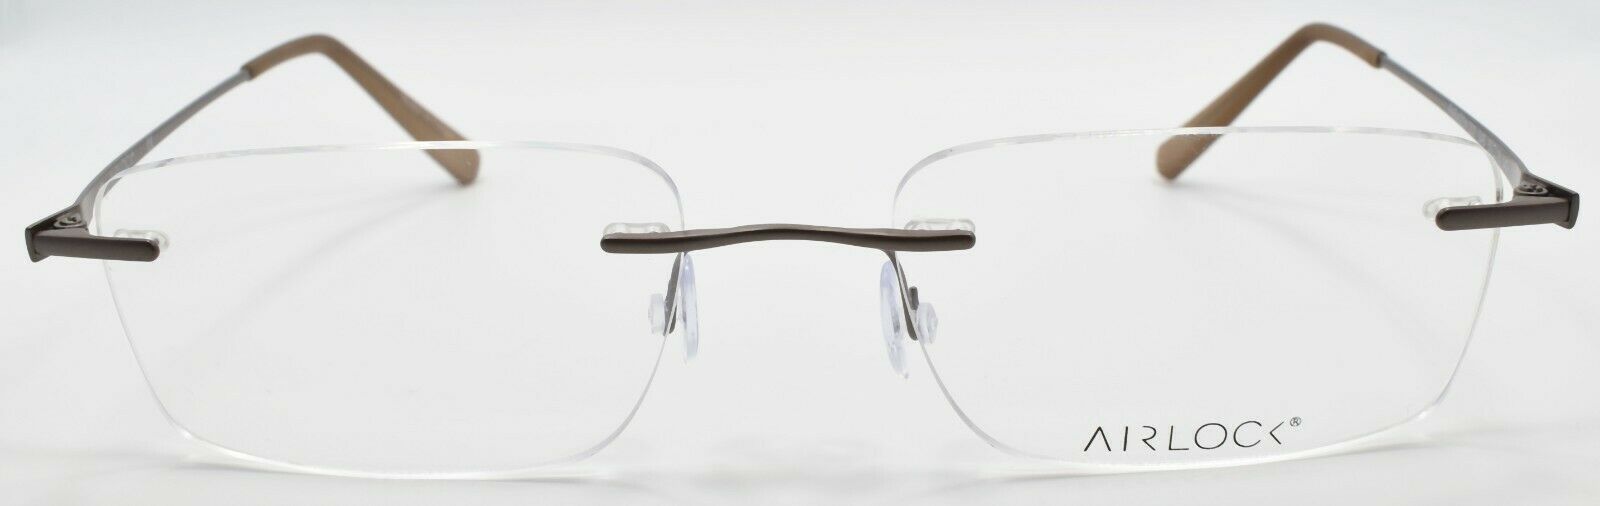 2-Airlock Paragon 202 046 Men's Eyeglasses Frames Rimless 53-18-140 Light Gunmetal-886895451420-IKSpecs